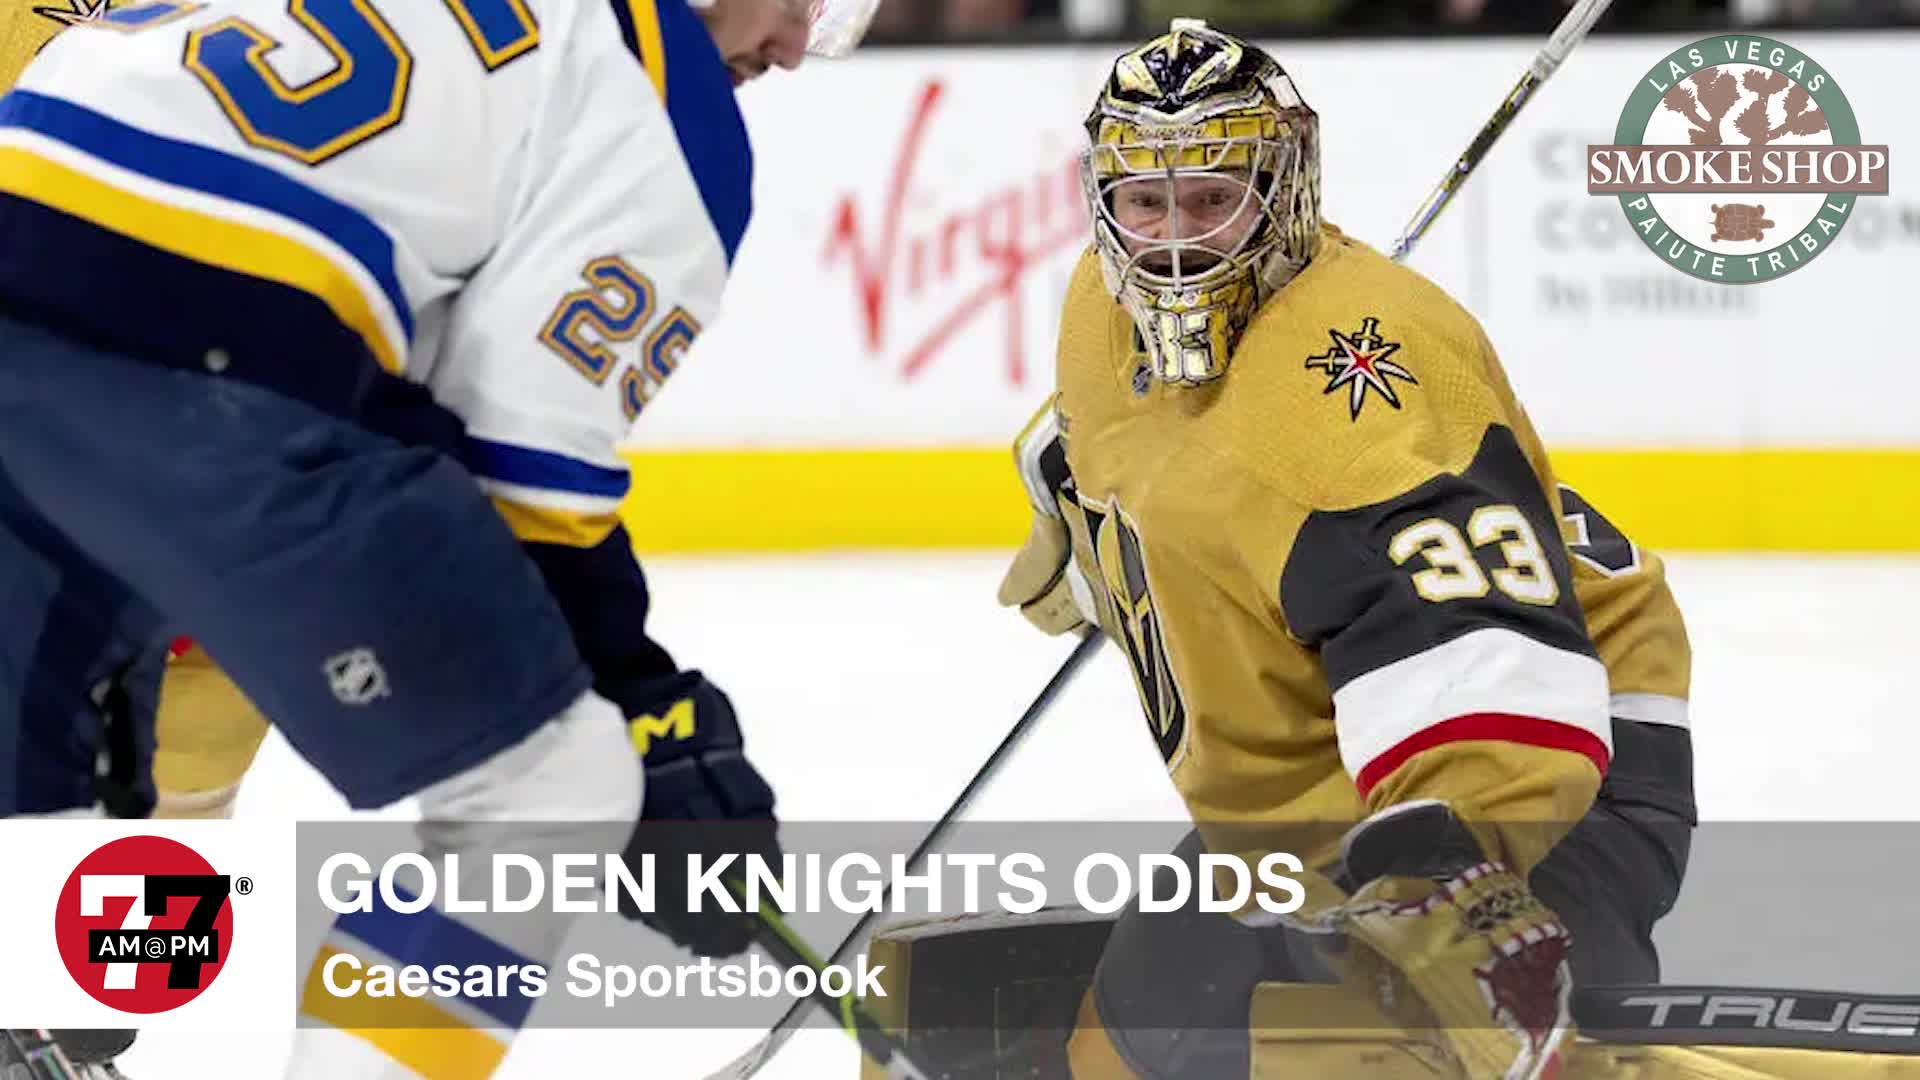 Golden Knights odds